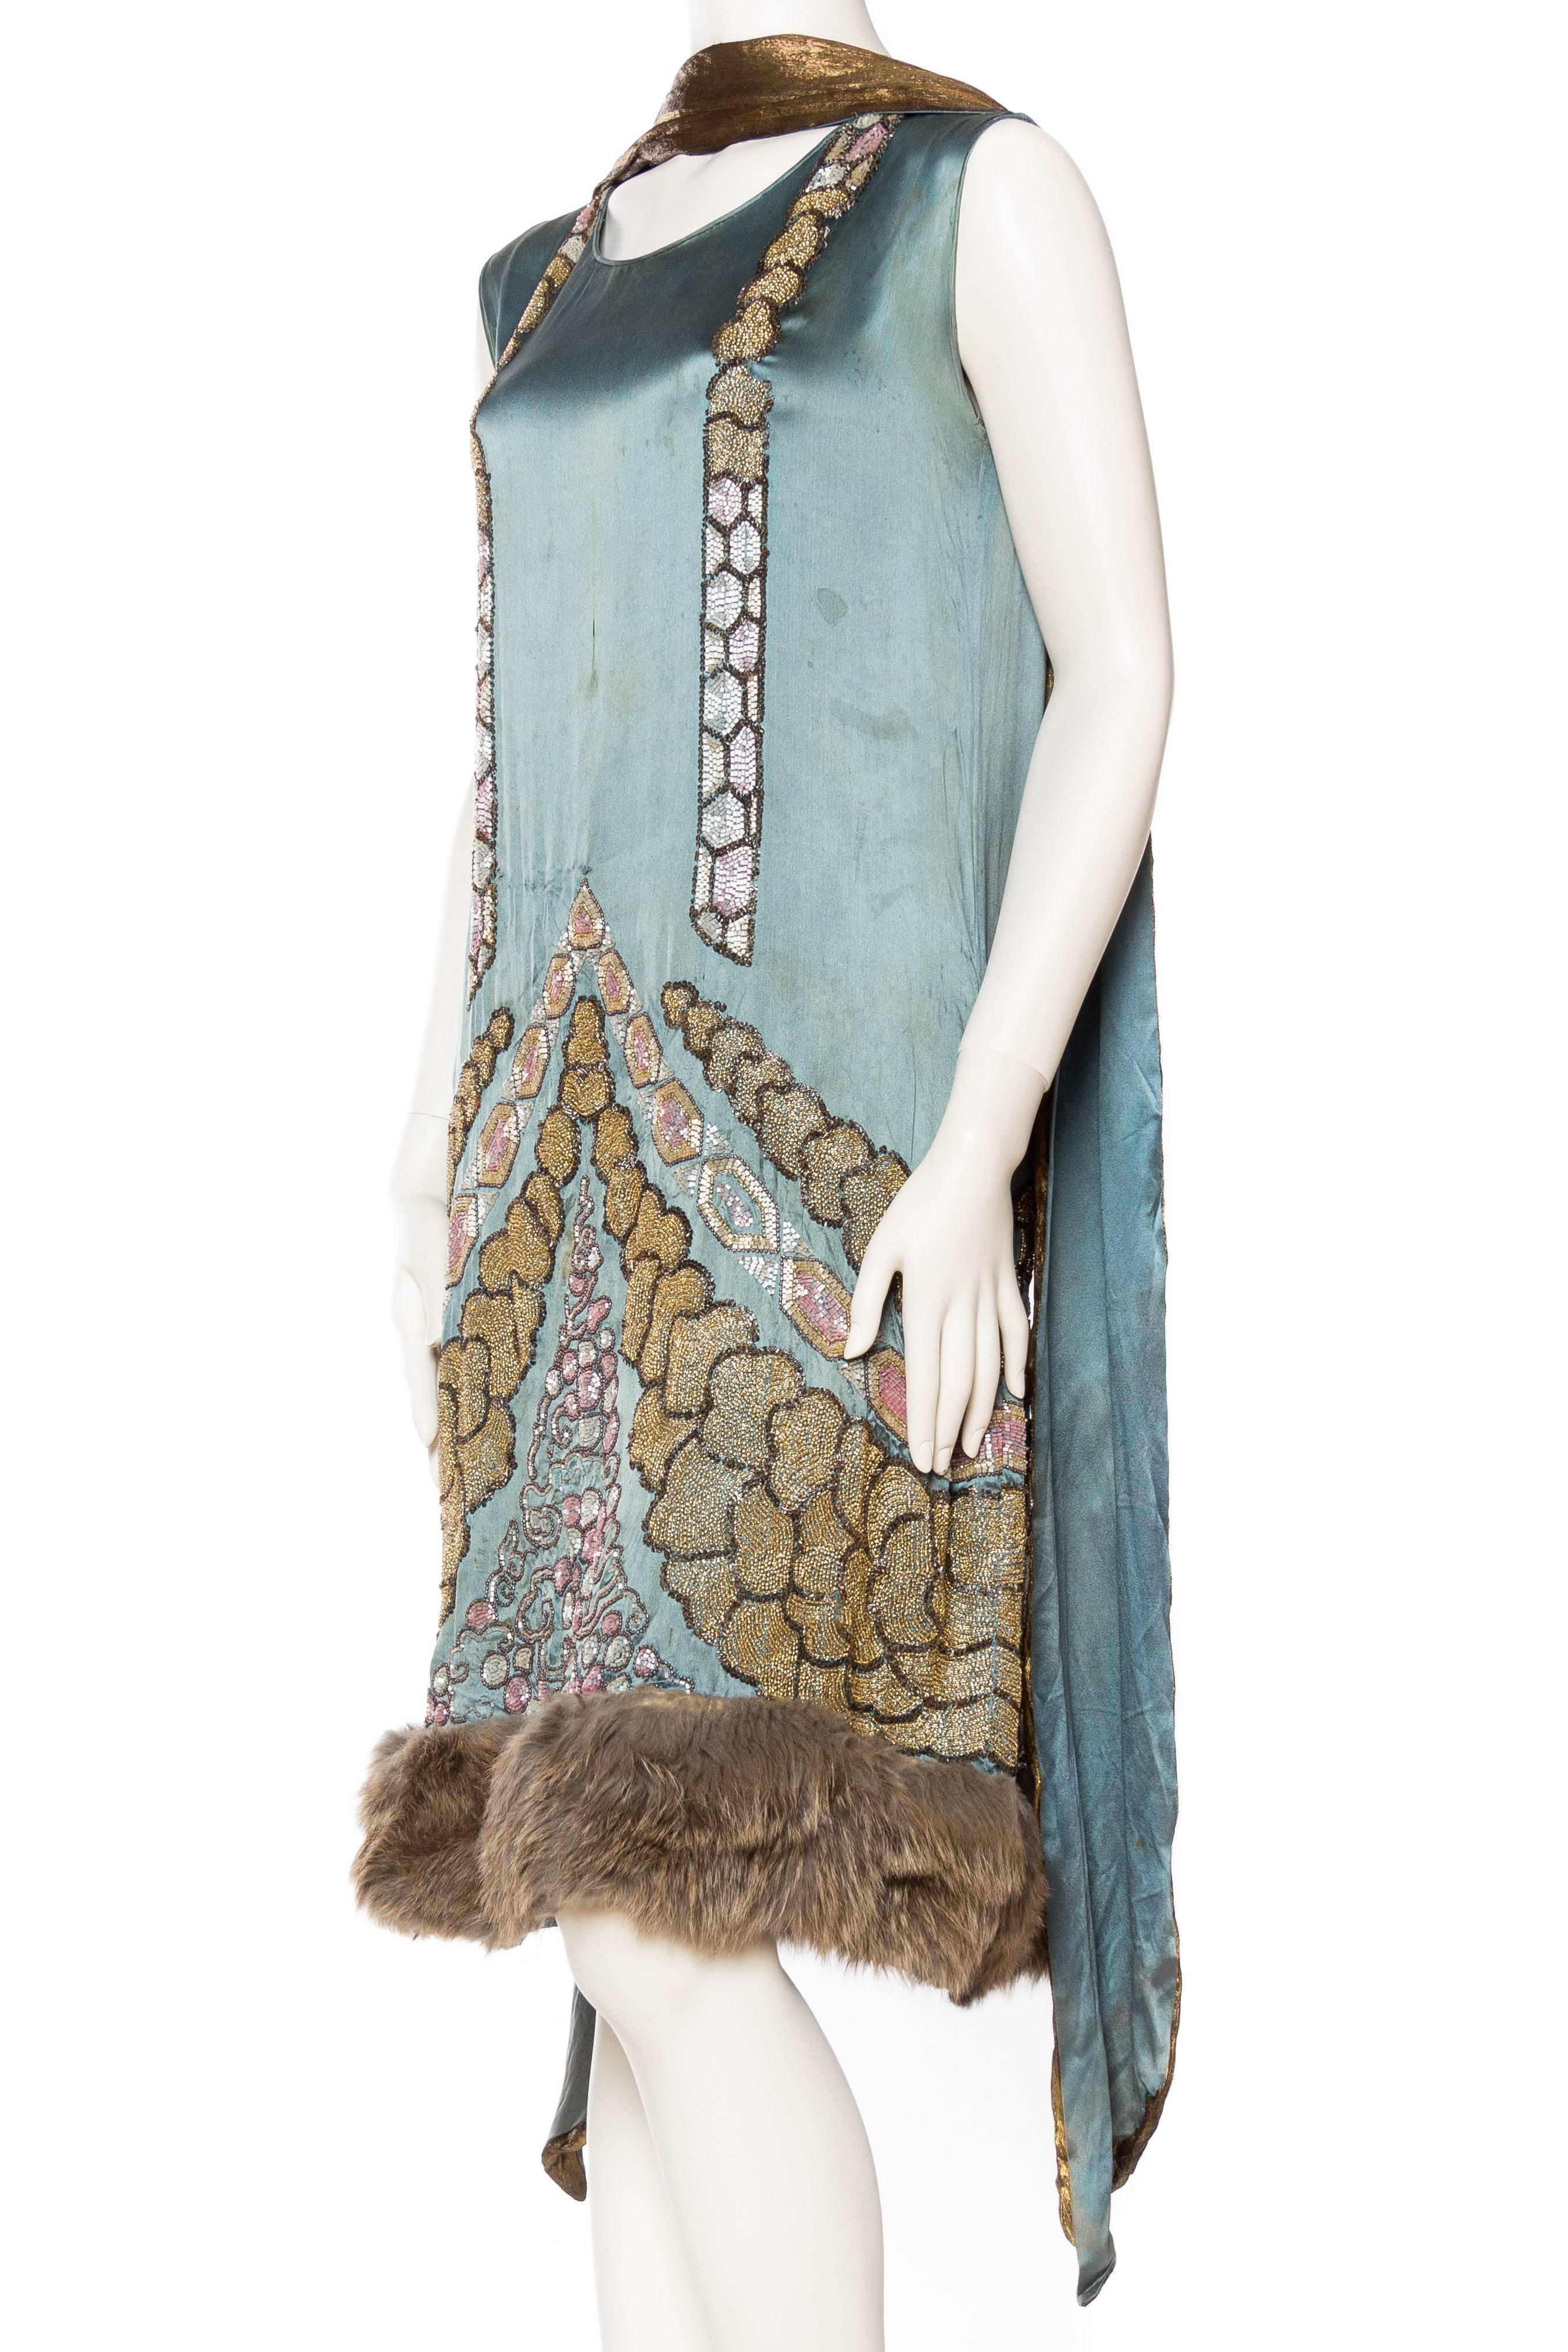 1920s Beaded Dress with Fur Hem and Lamé shawl 1